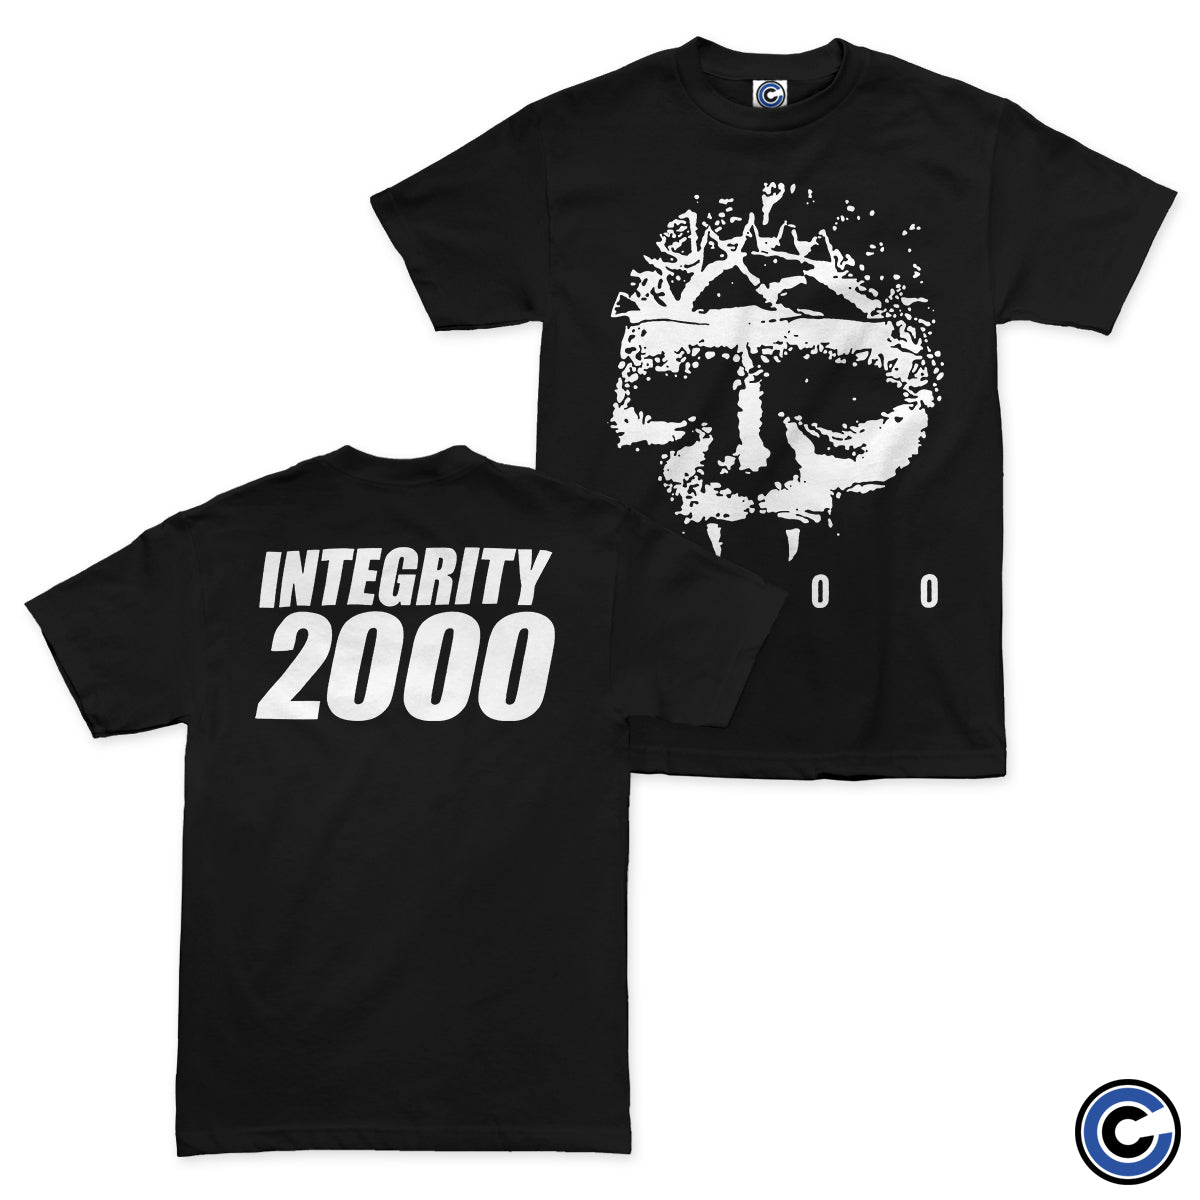 Integrity "2000" Shirt